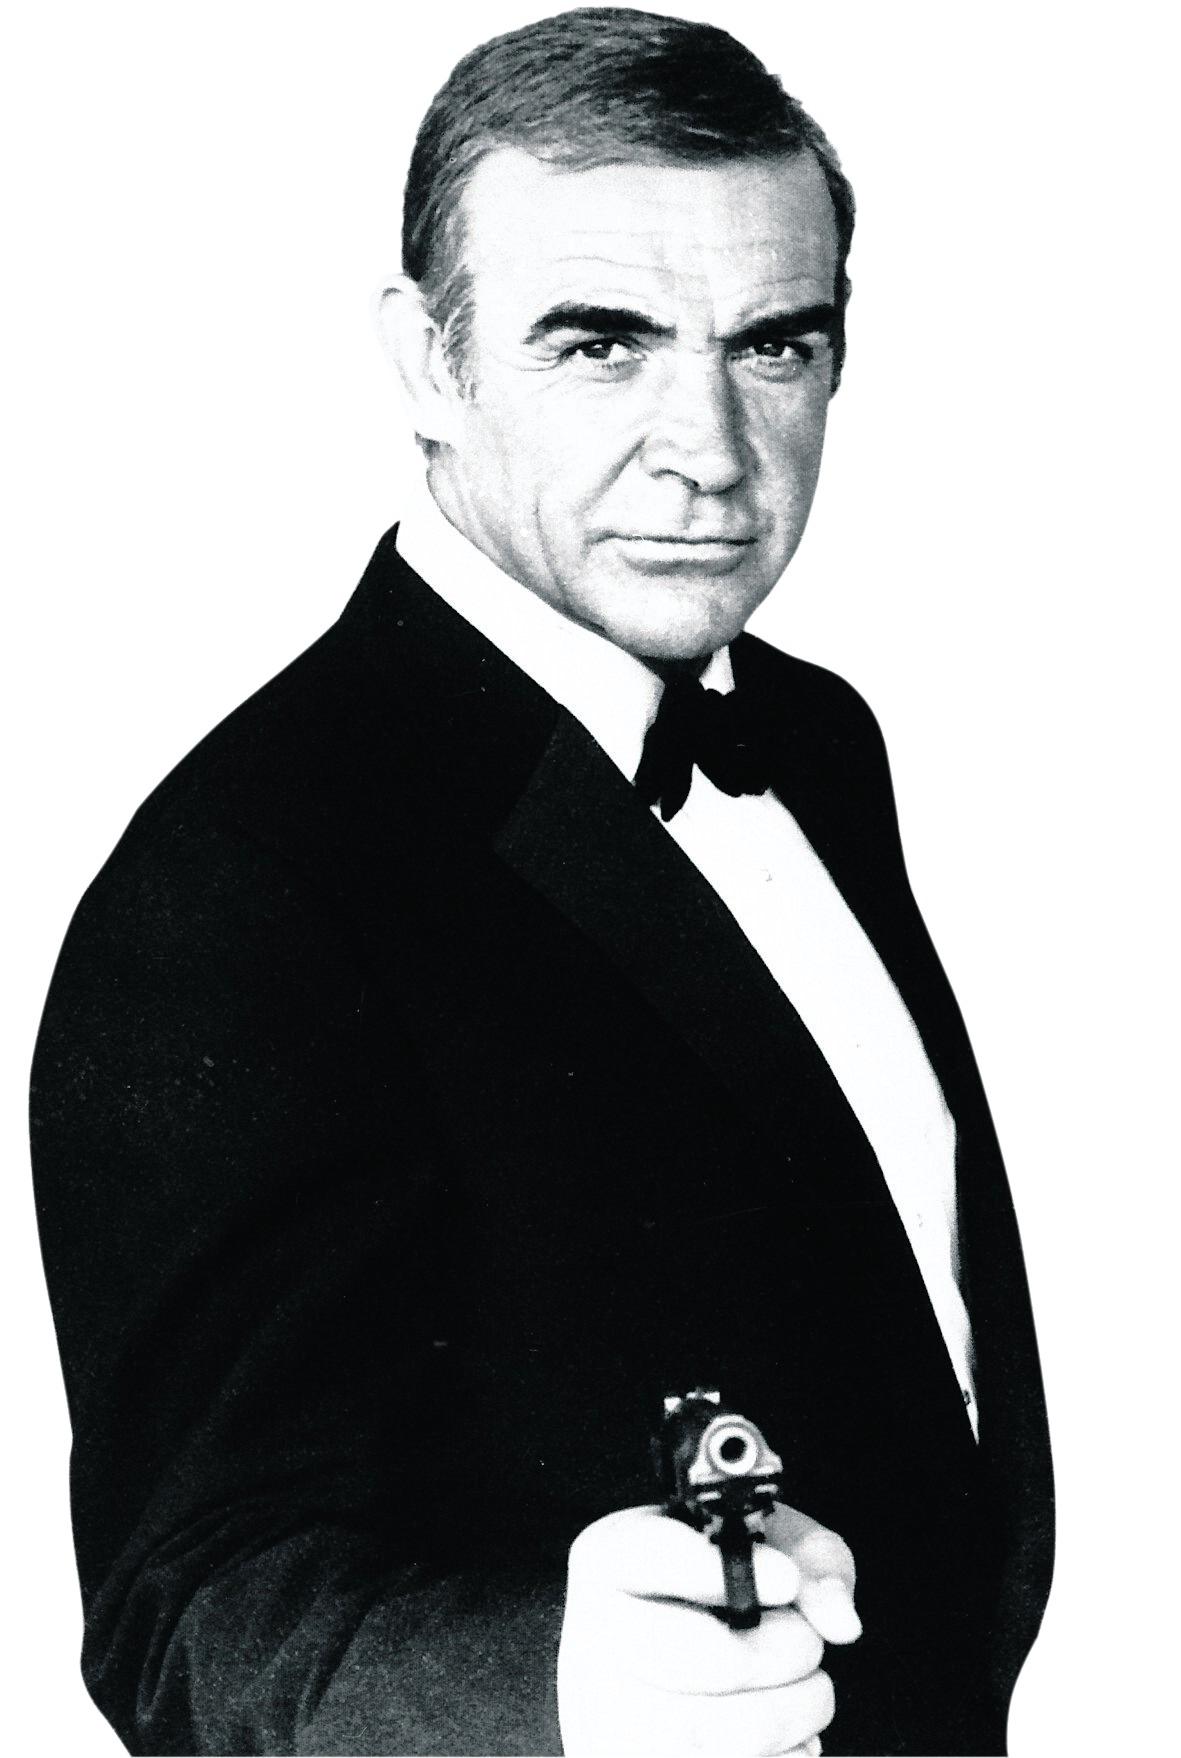 Sean Connery som James Bond.